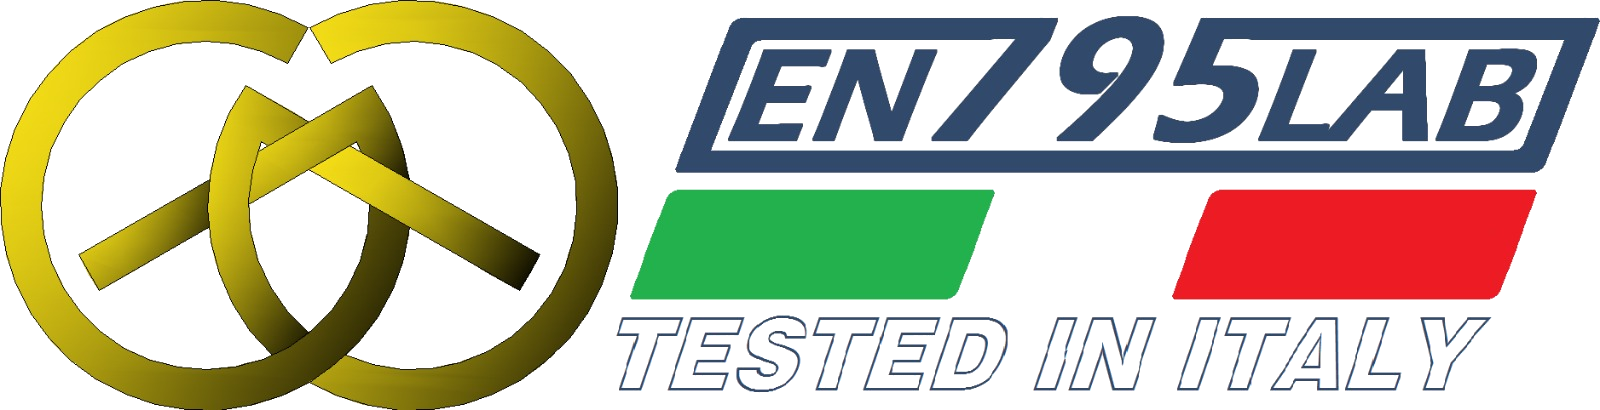 EN795LAB-News-EN795LAB - Excellence in testing